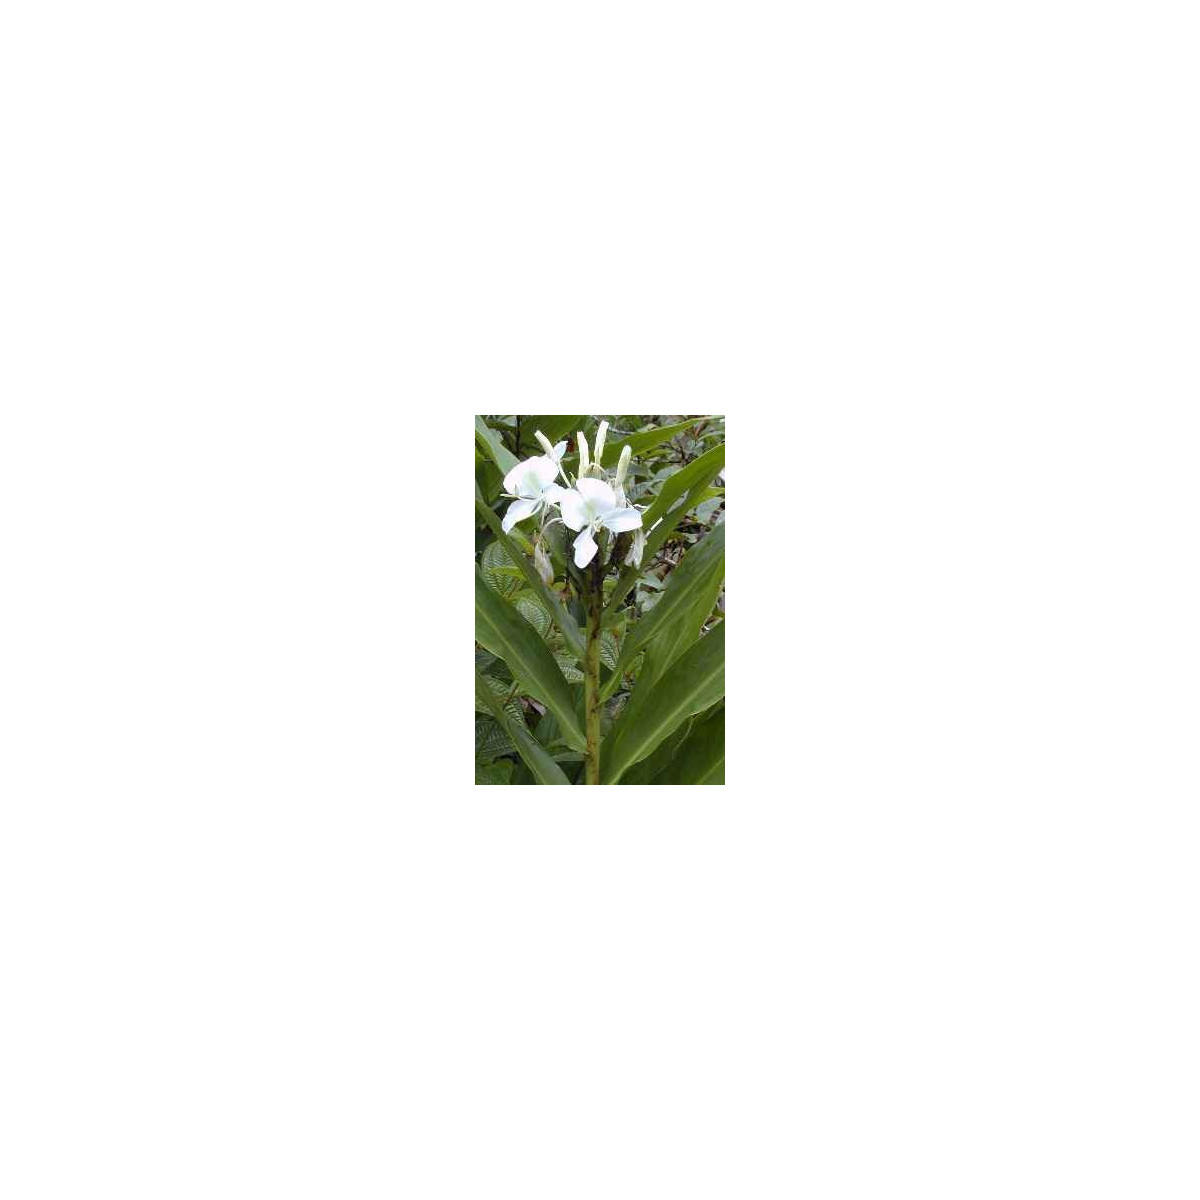 Okrasný zázvor - Hedychium - semena - 2 ks